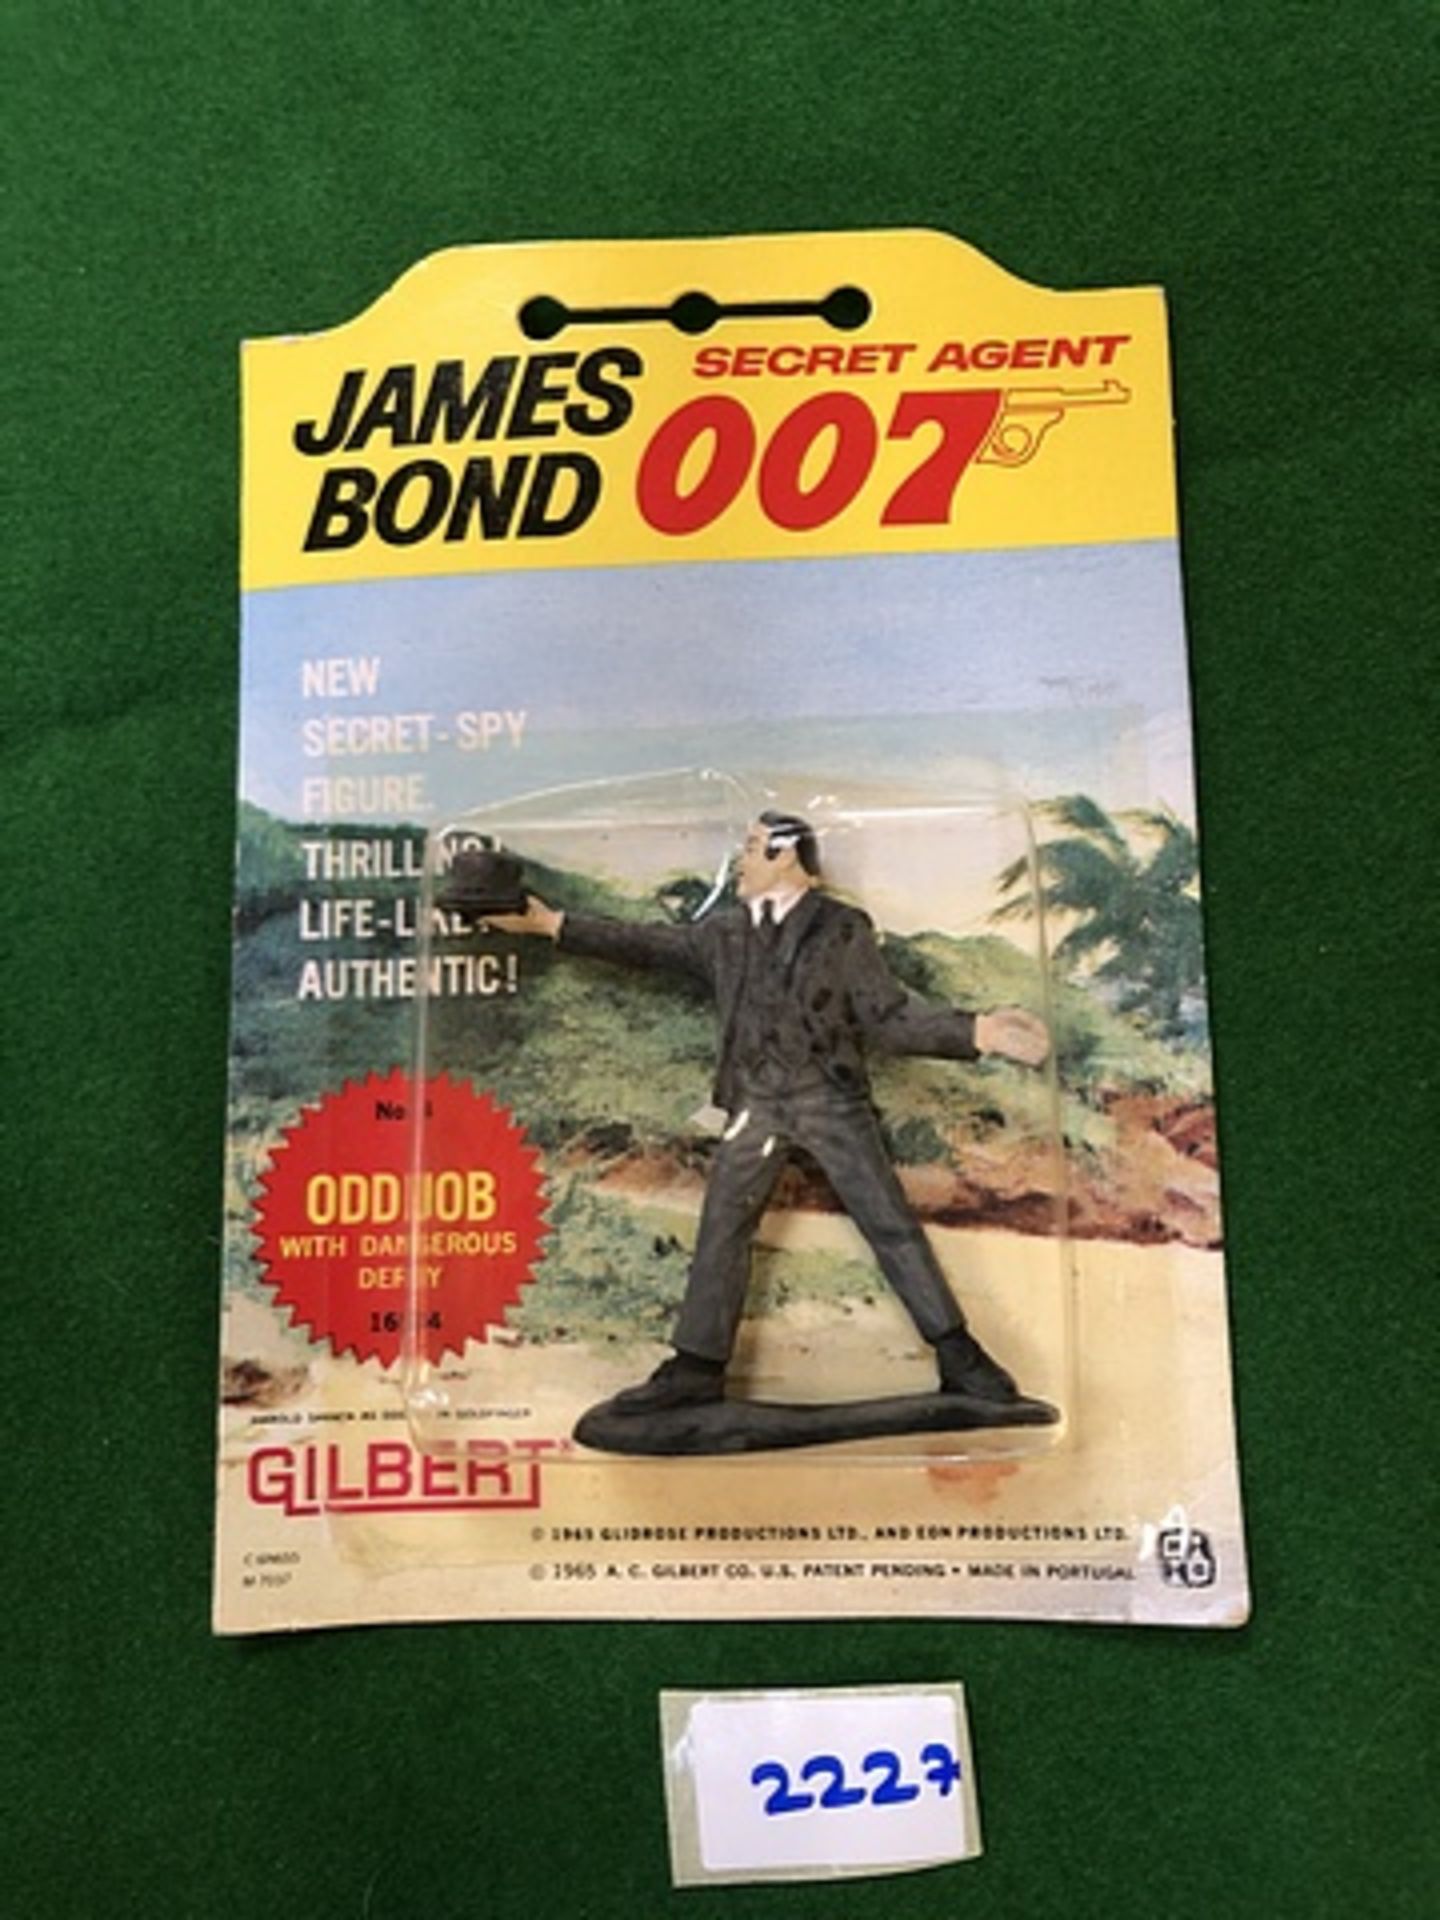 Gilbert James # 16500 Bond Secret Agent 007 New Secret Spy Figure Number 4 Odd Job With Dangerous